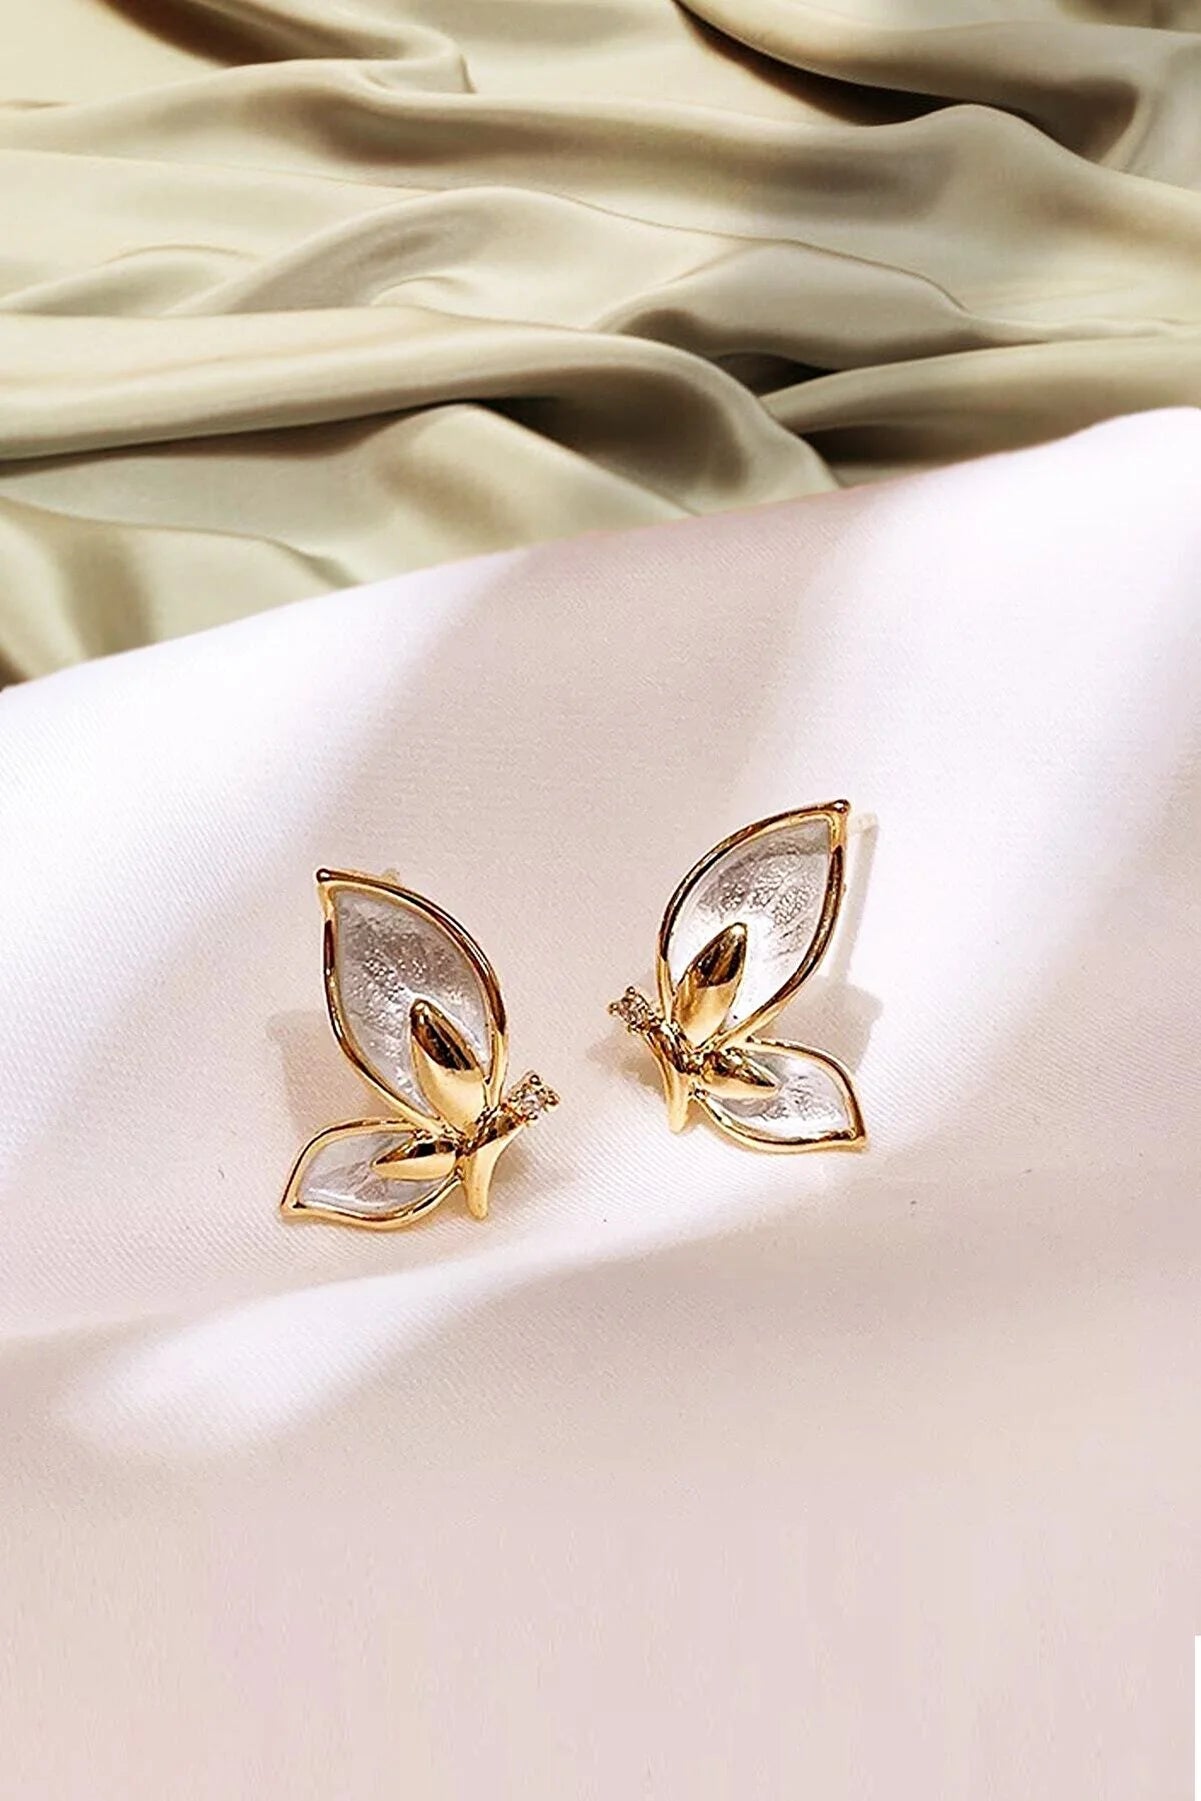 Vintage Helen Leaf Earrings with Zircon Stones - Nickel-Free Brass, Butterfly Theme, Daily Wear, Convertible Link Design